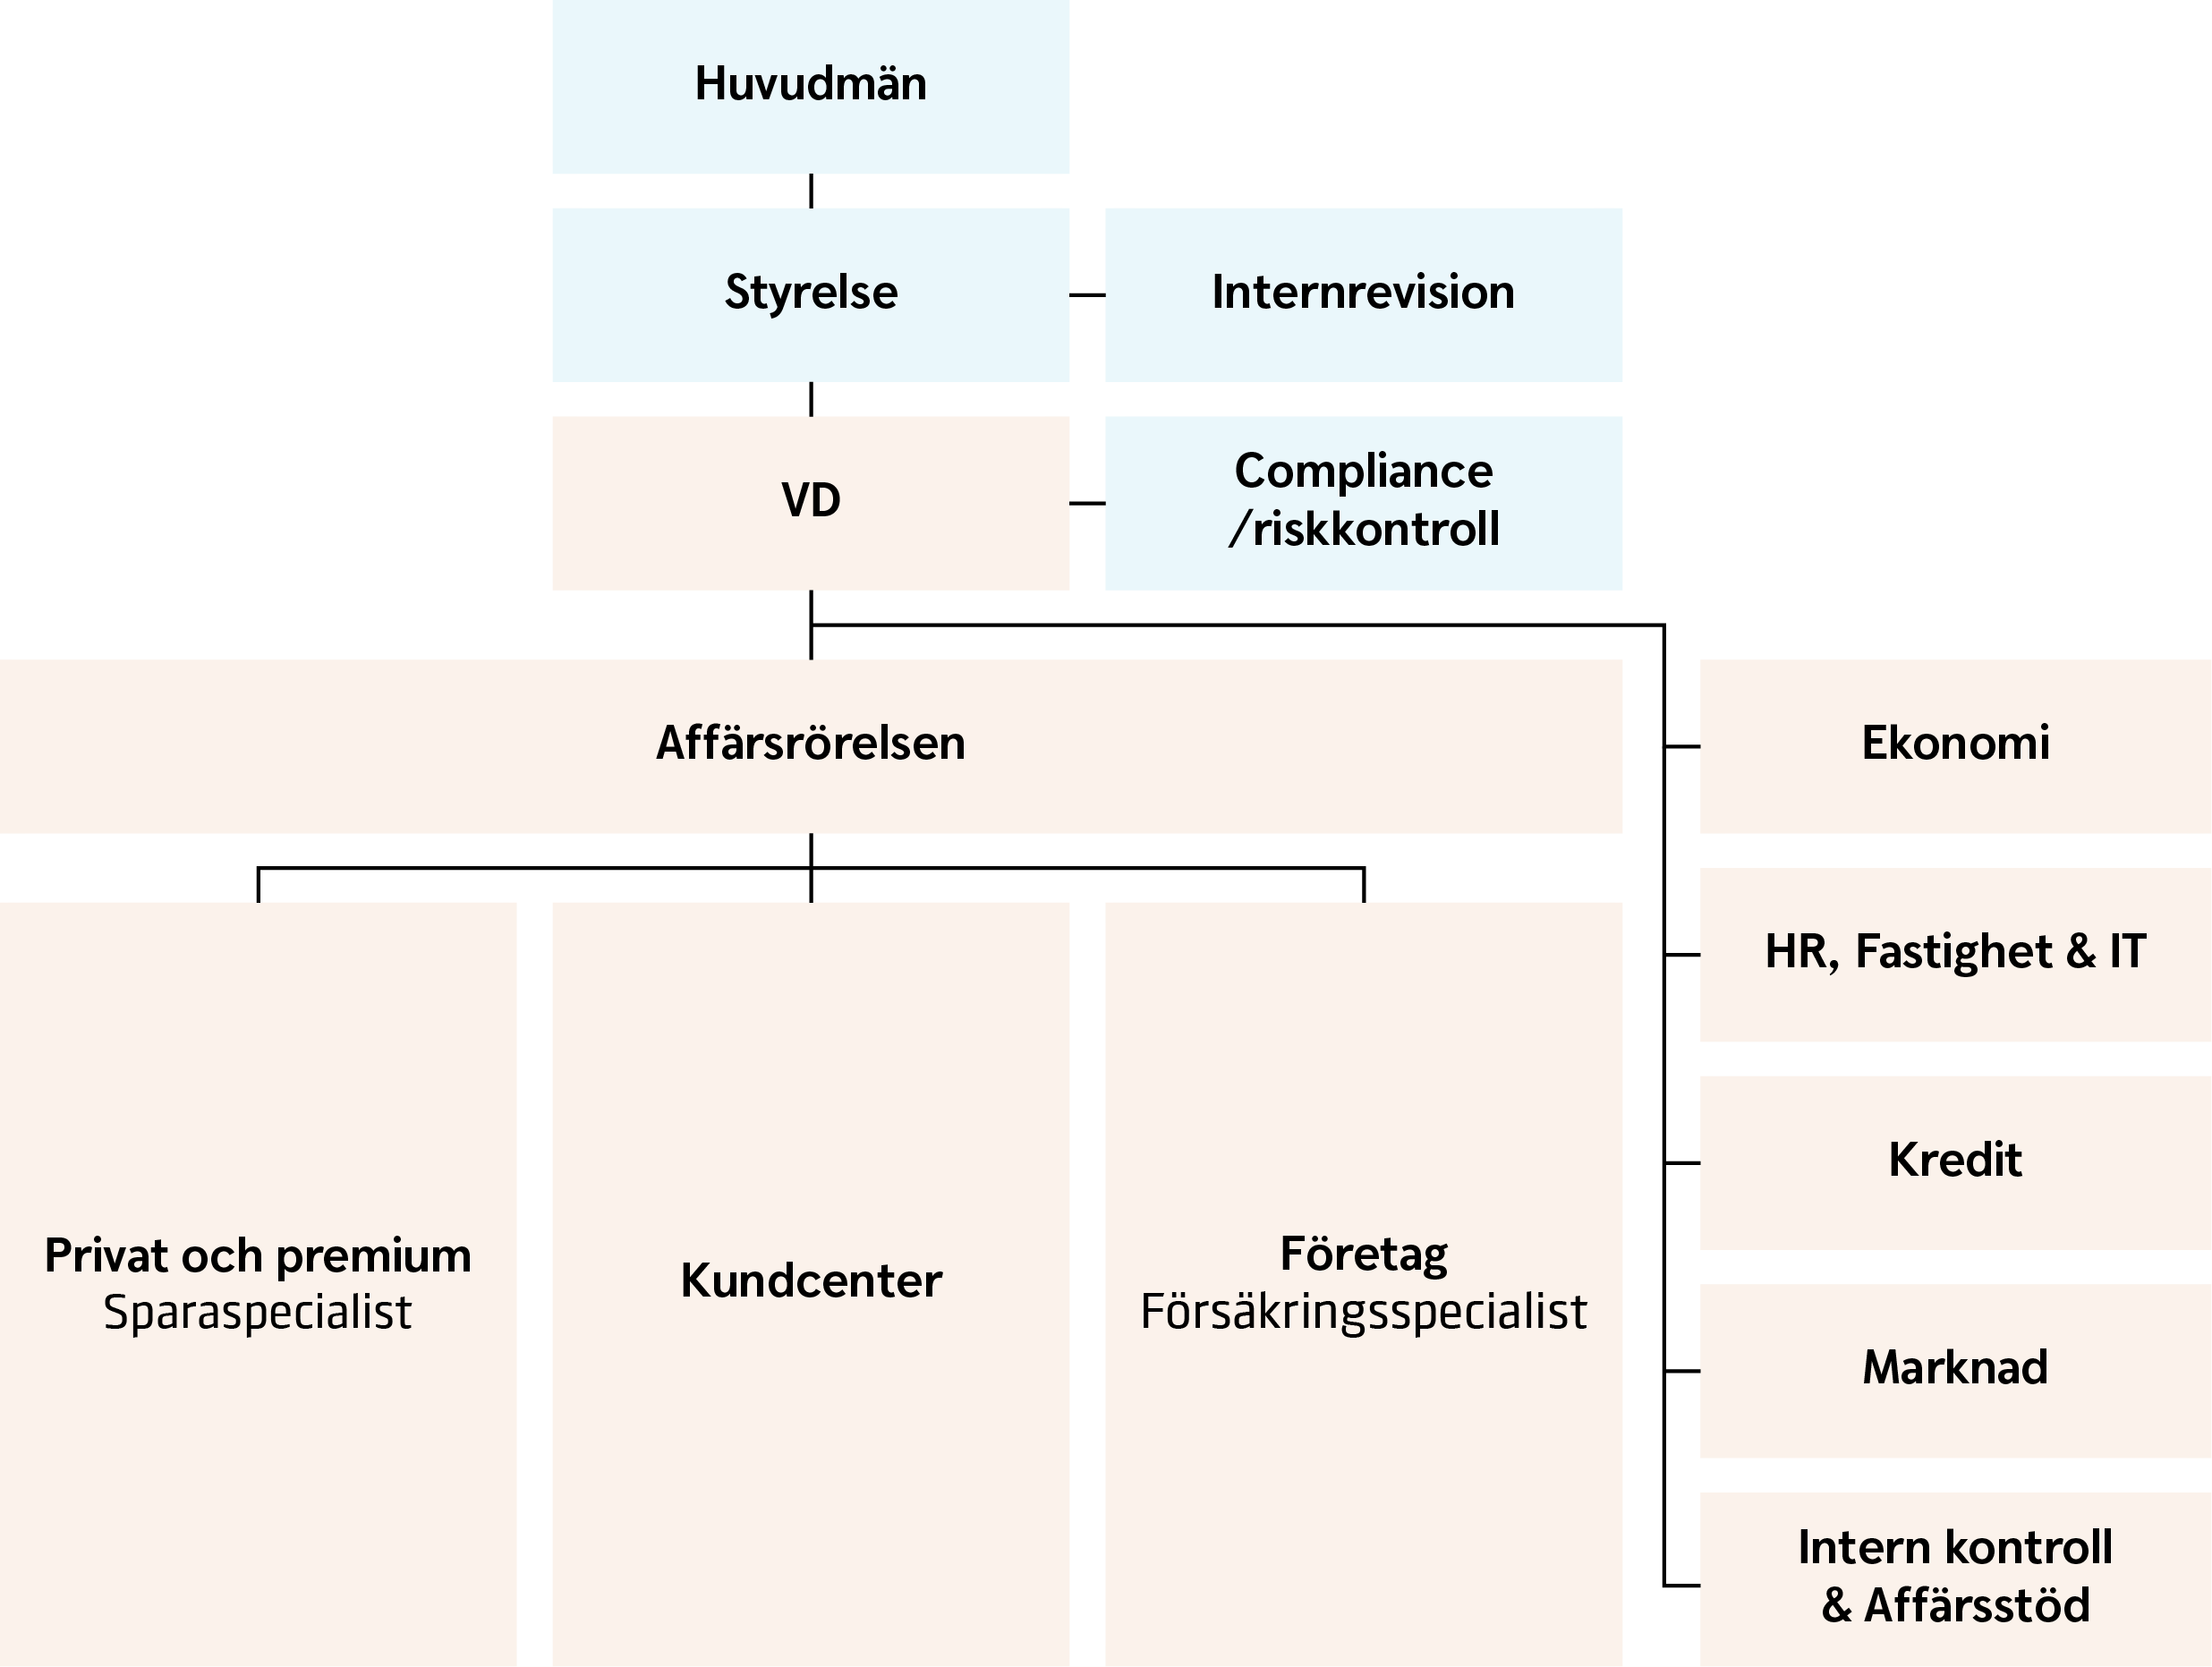 Leksands Sparbank organization overview